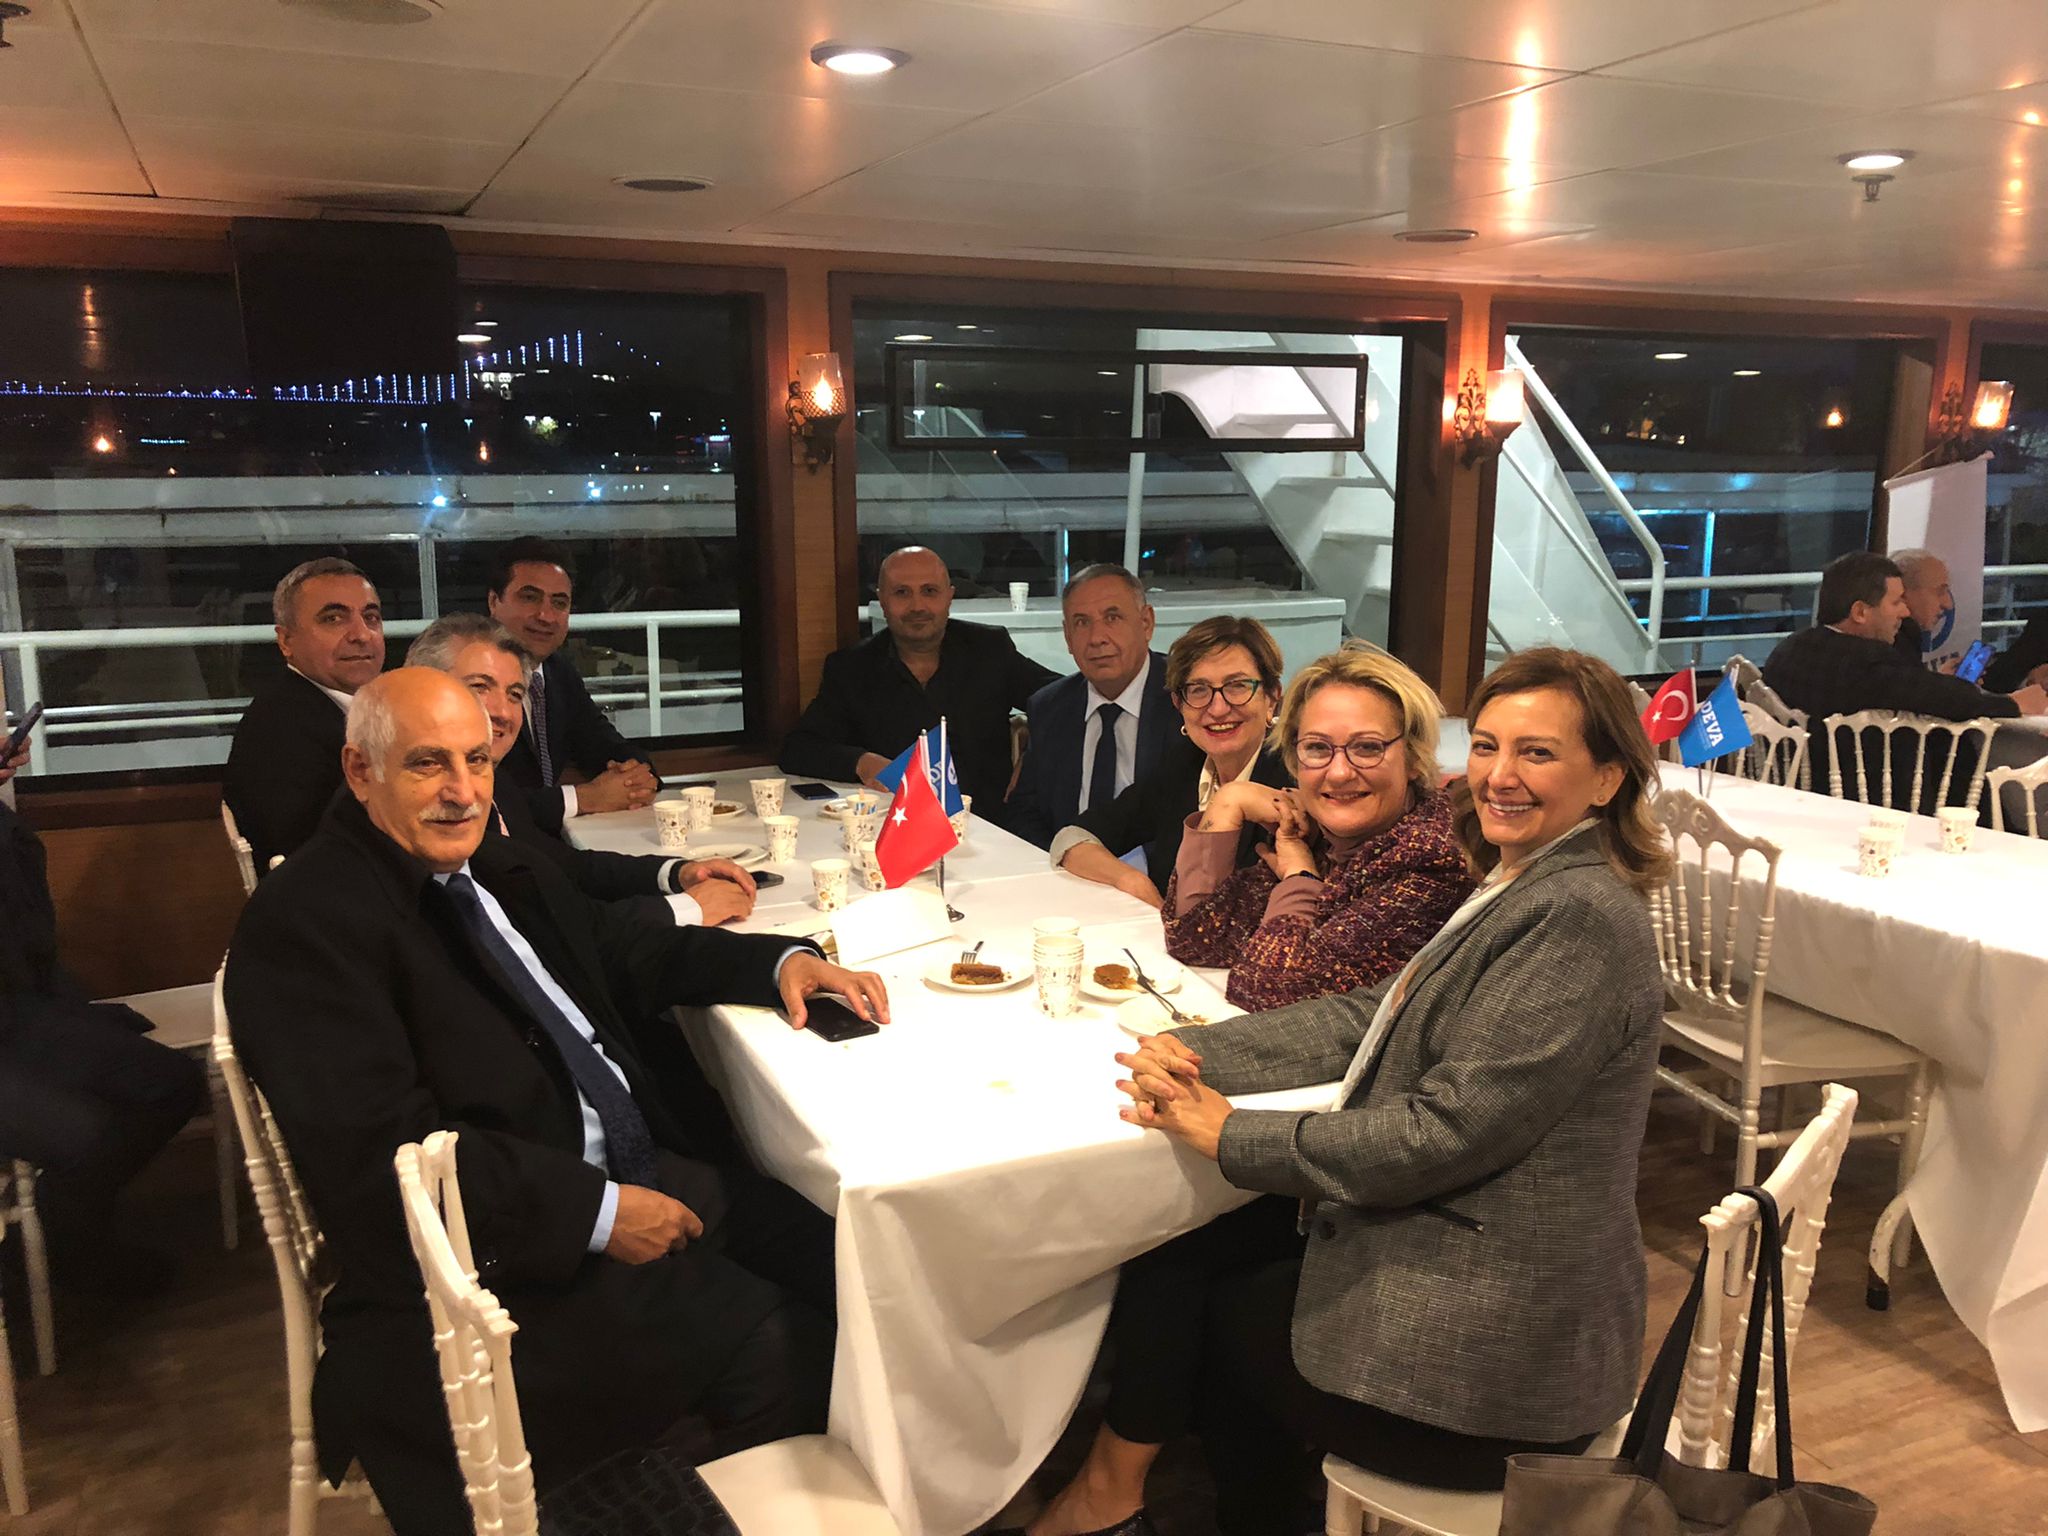 As Ben Seçerim, we were invited to the Deva Party provincial presidents' dinner meeting.